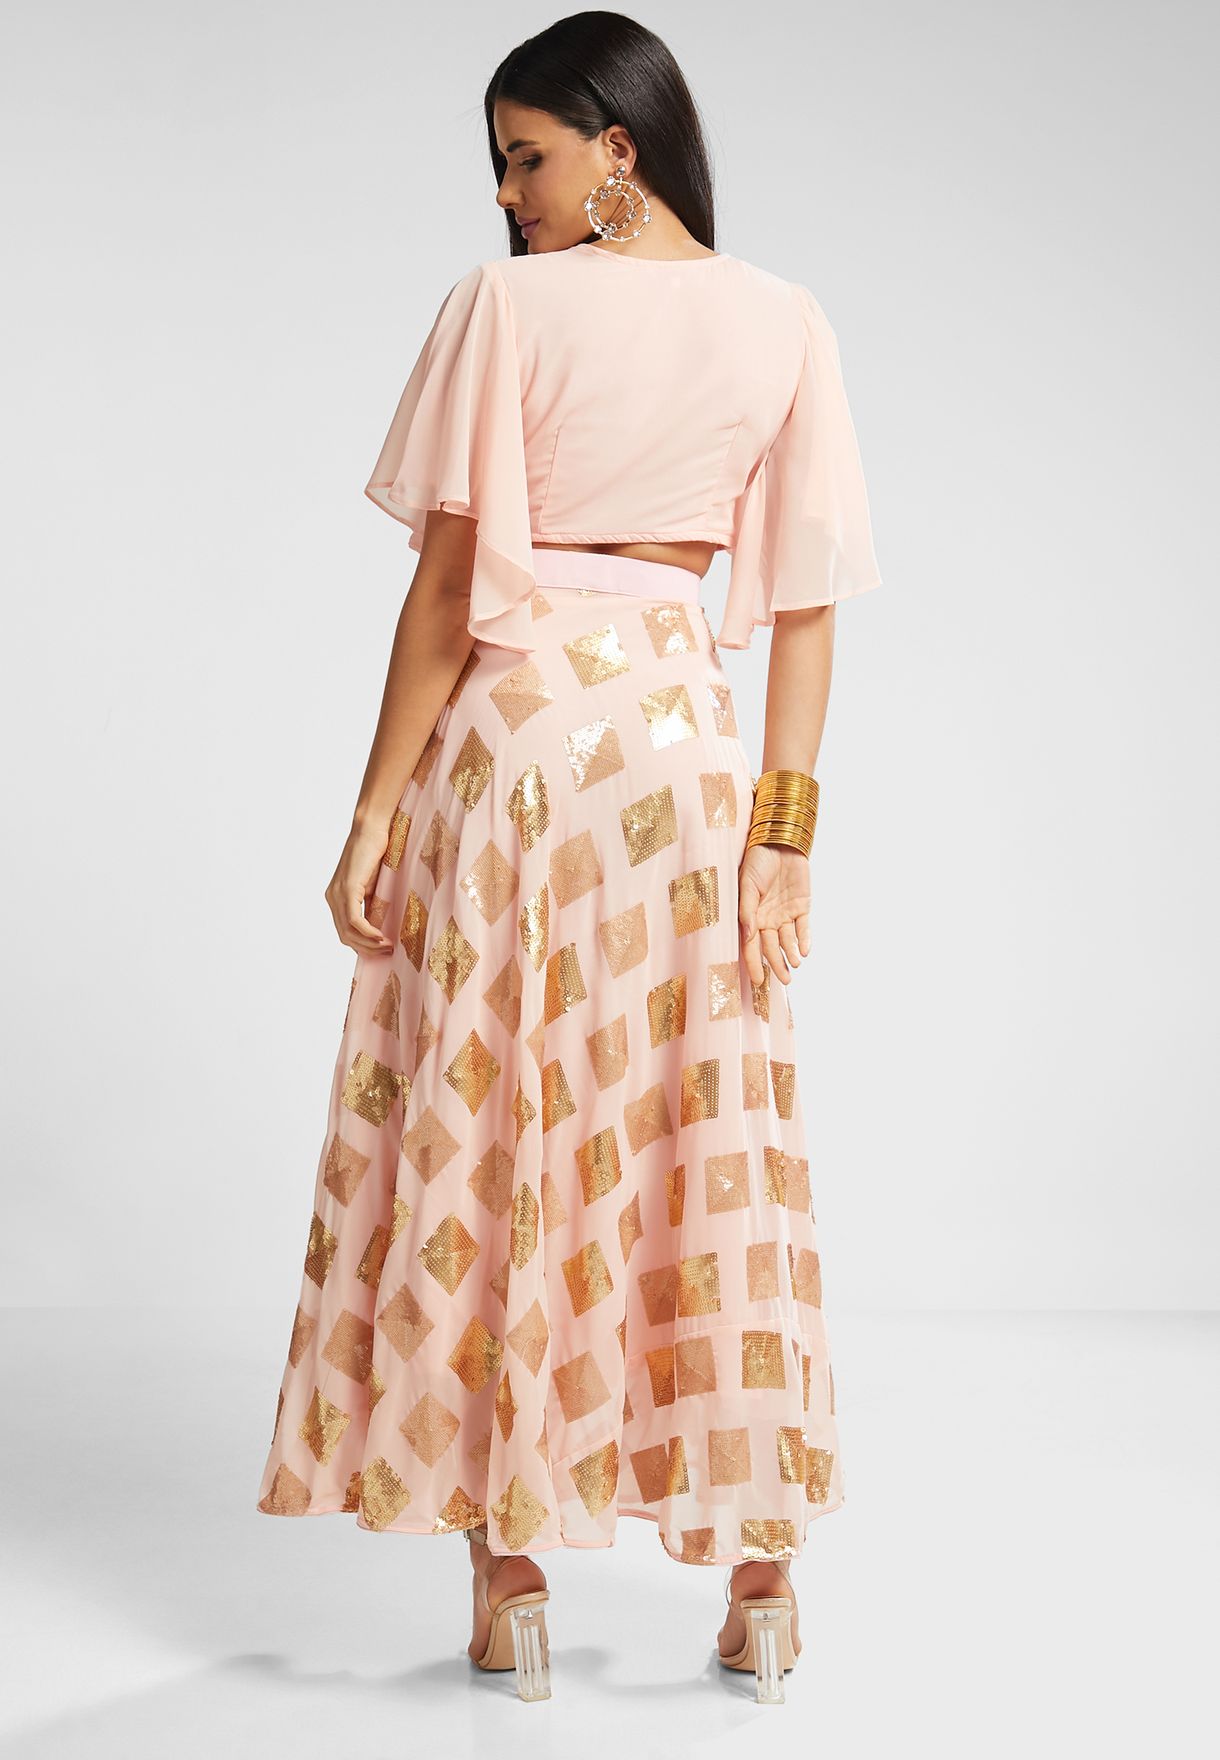 Ruffle Sleeve Crop Top & Embellished Skirt Set